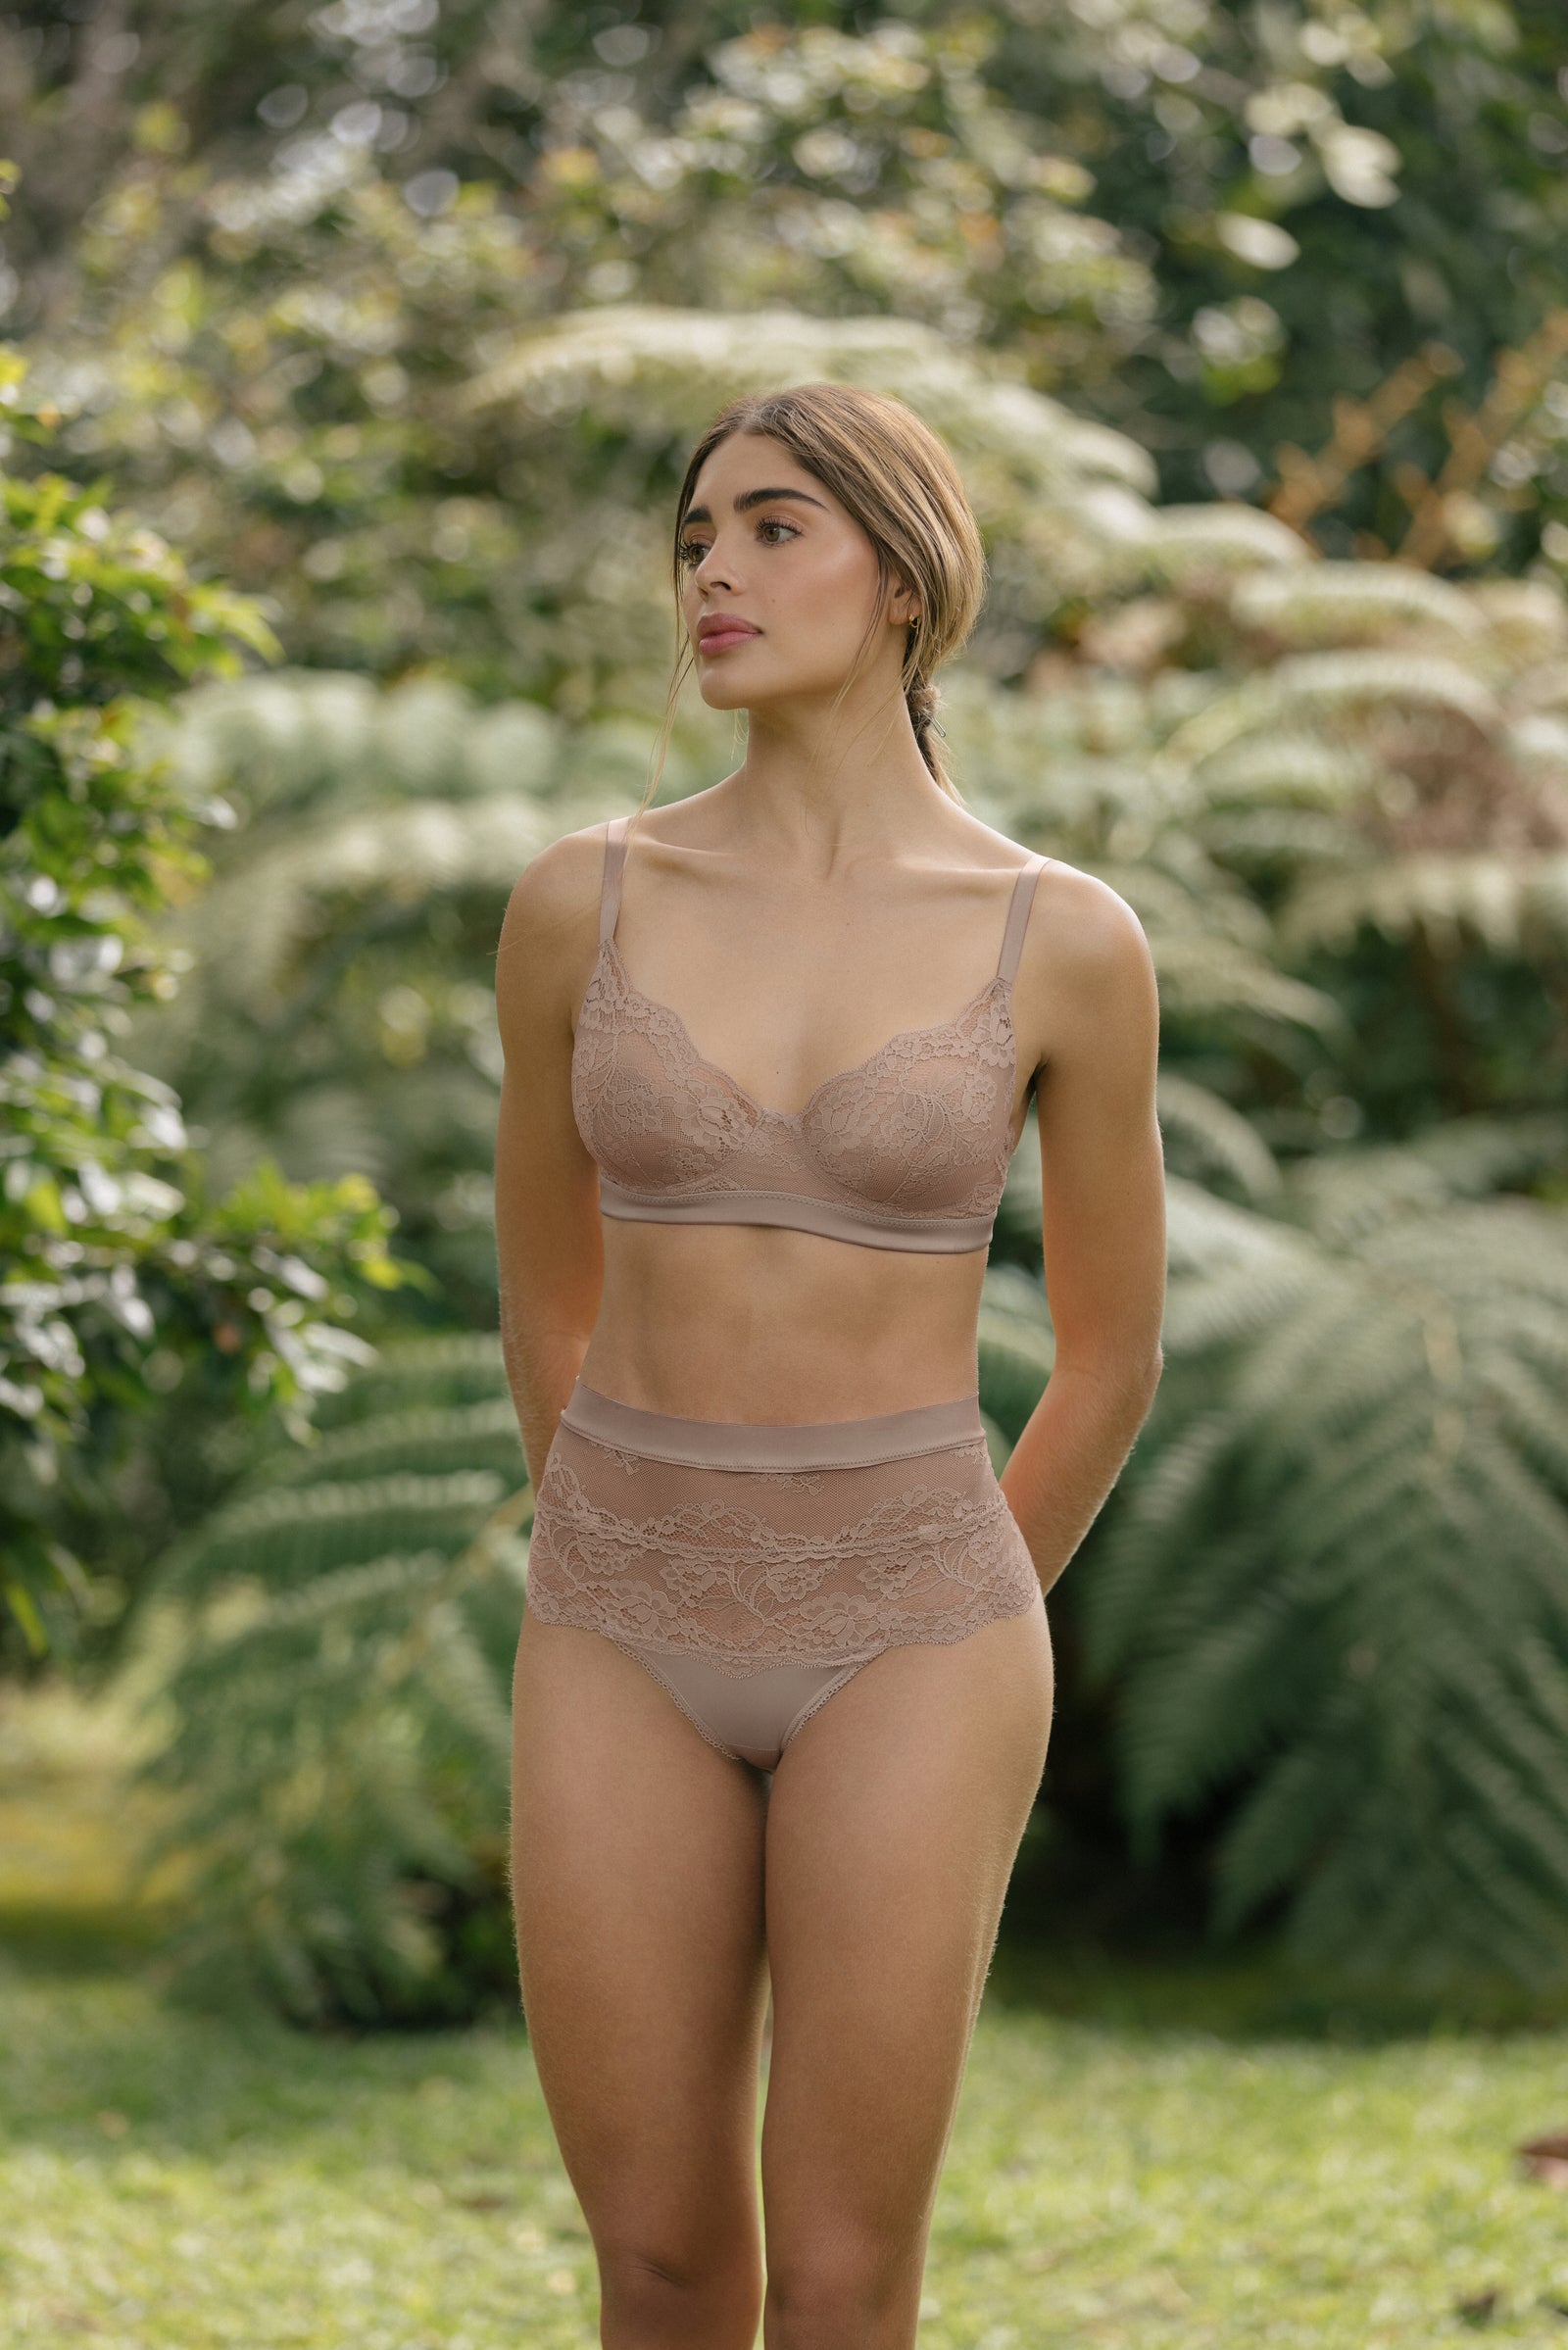 LALESTE Womens Seamless Underwear Boyshort Ladies Brazil